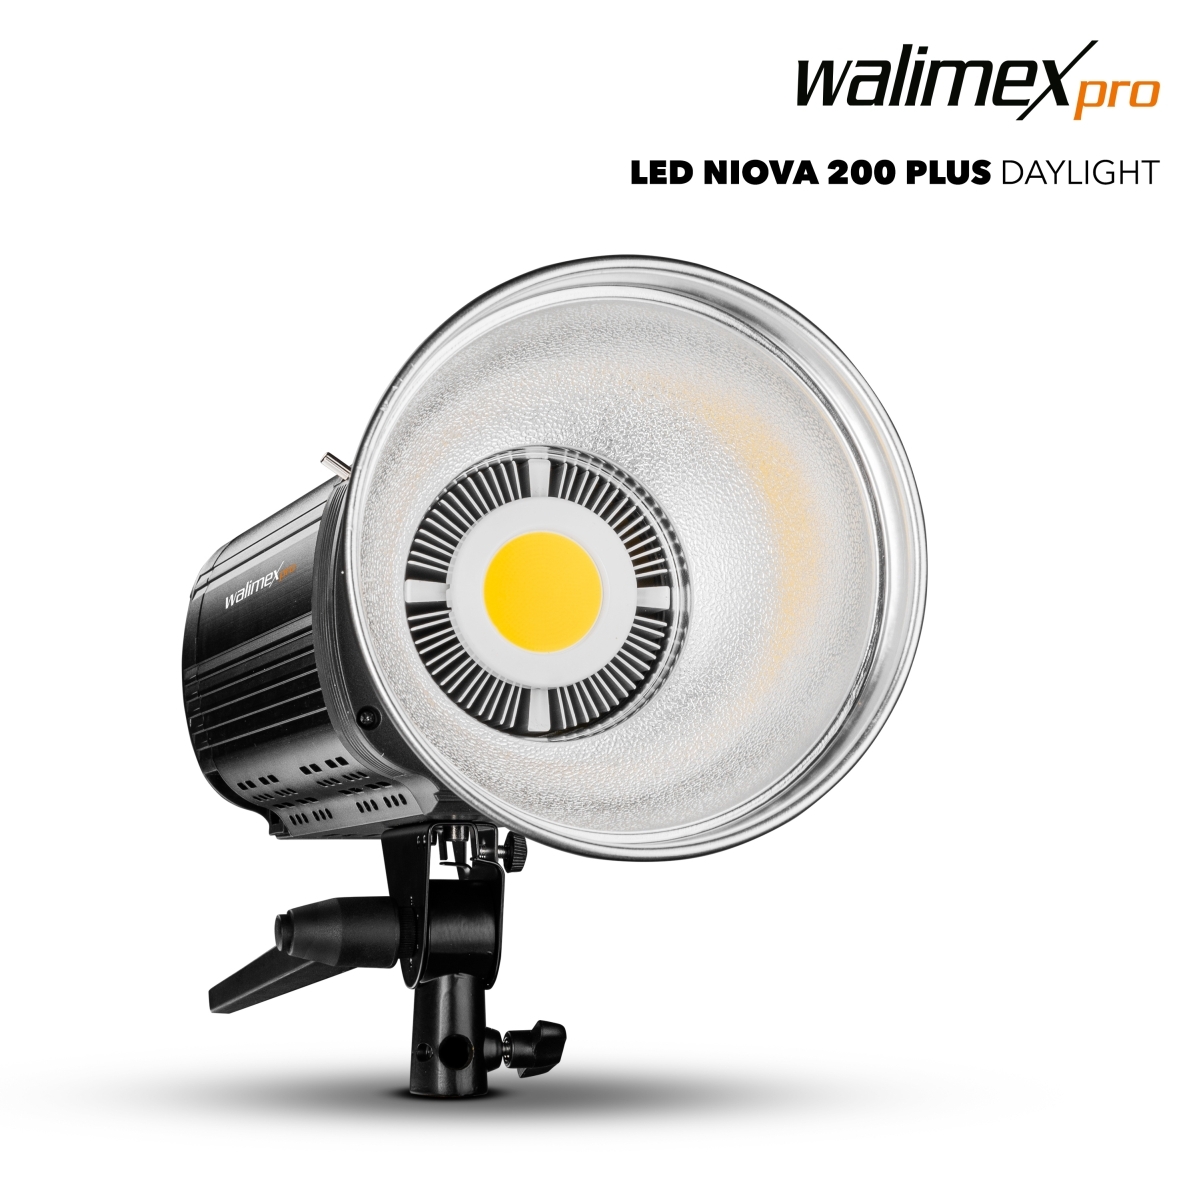 Walimex pro LED Foto Video Studioleuchte Niova 200 Plus...